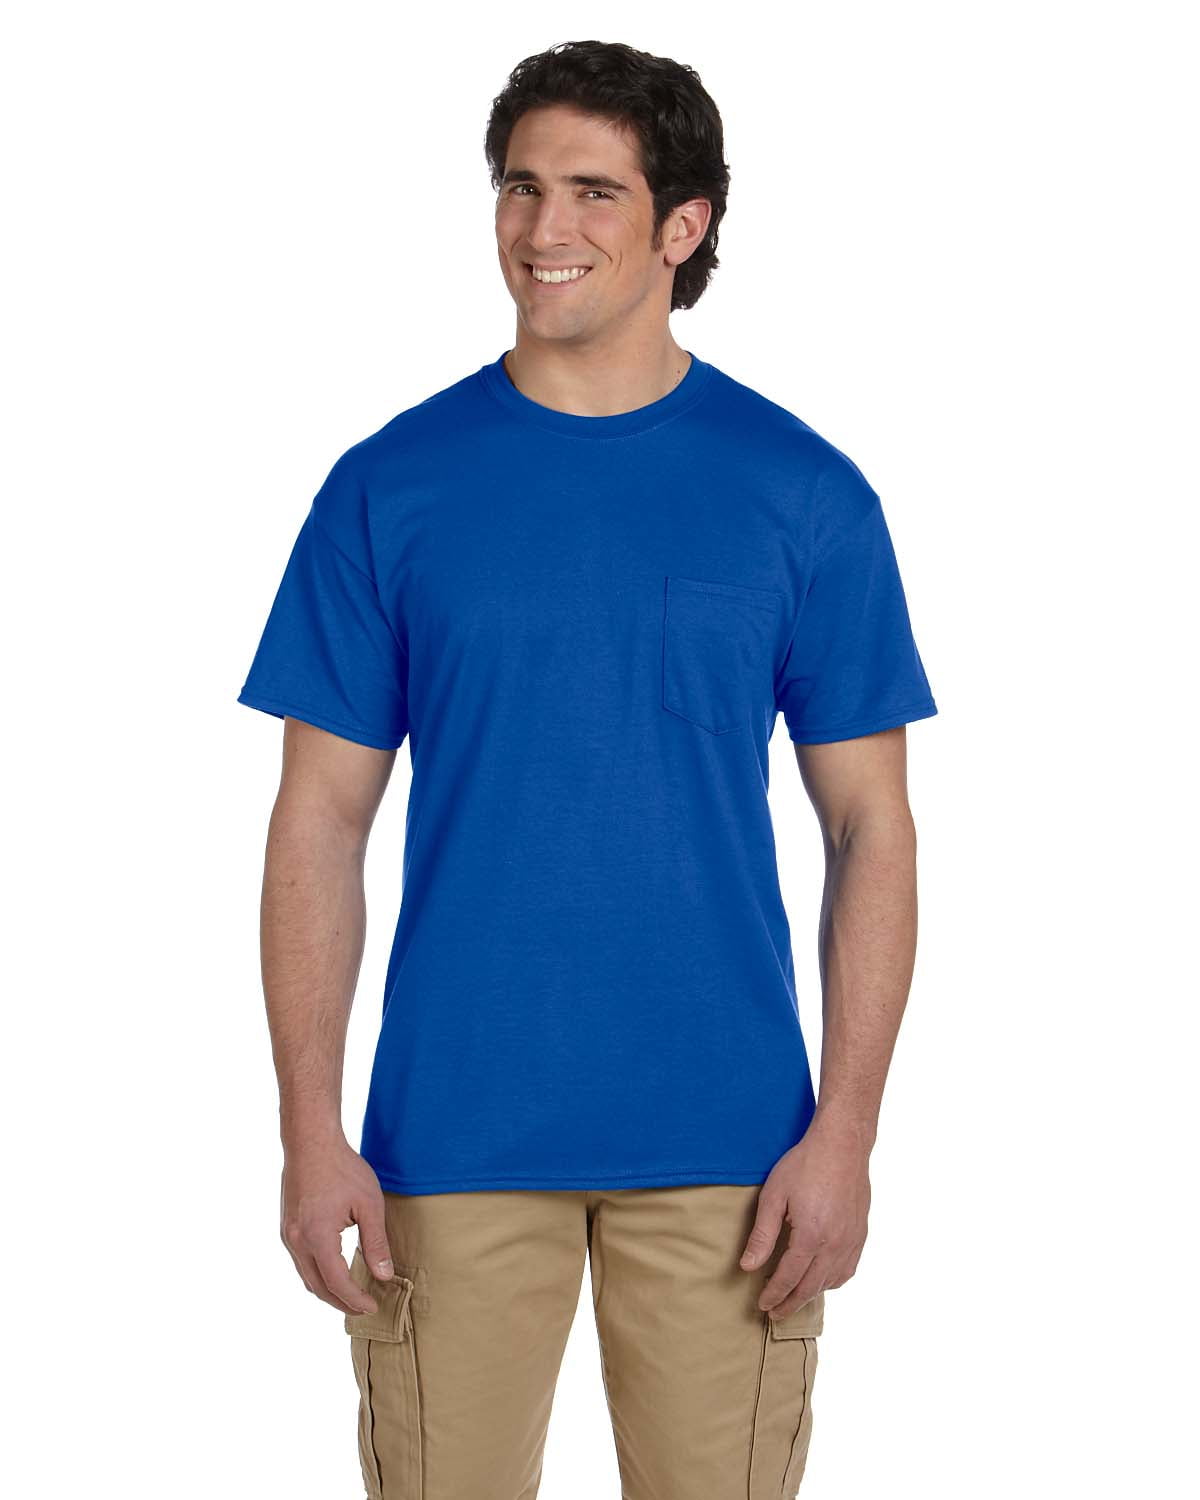 Gildan Men's Dryblend Double Needle 7/8 Inch Collar T-Shirt, Style G8300